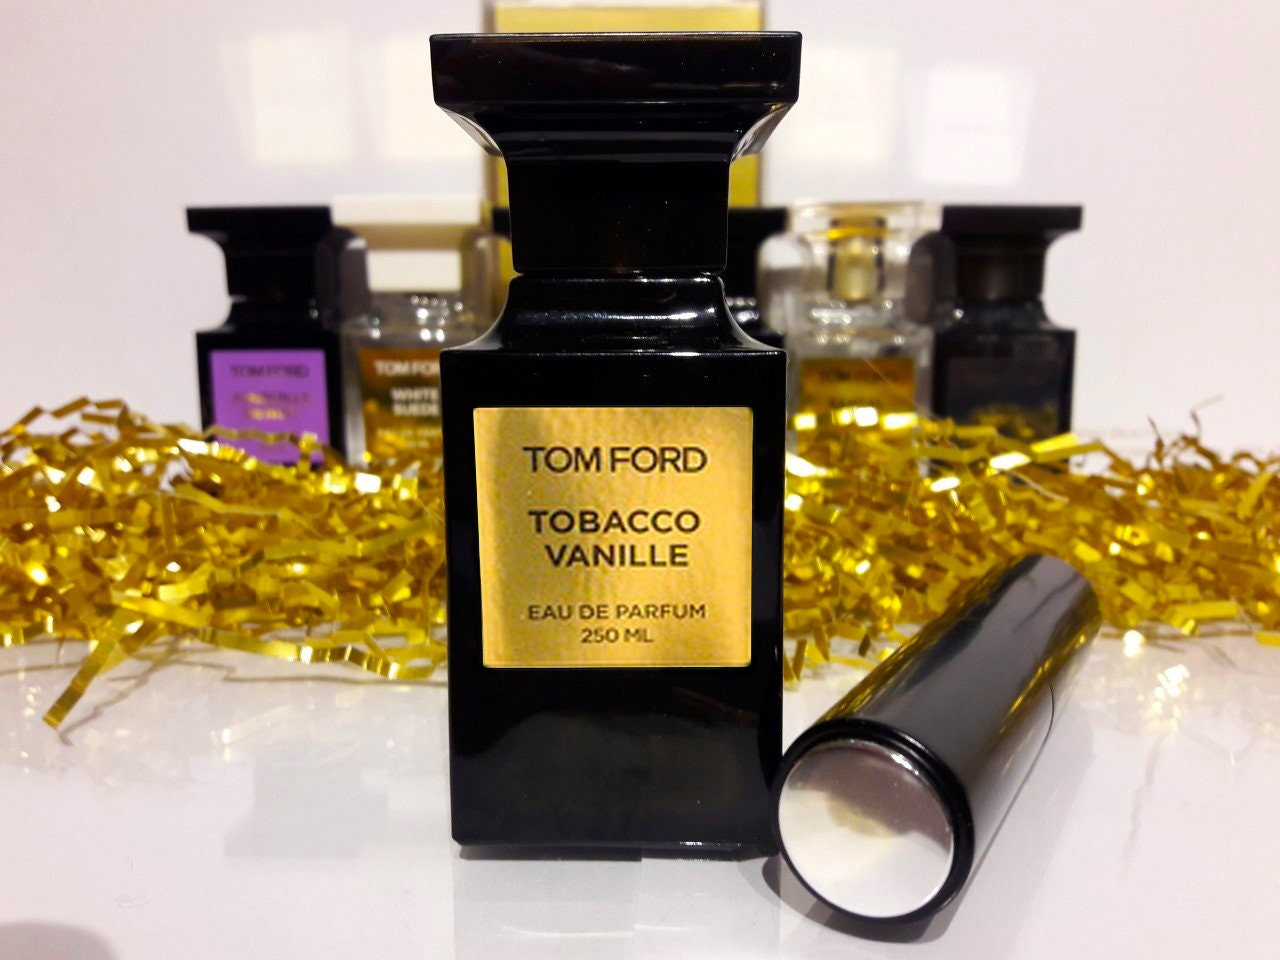 Tom Ford Tobacco Vanille Sample Offers Sale, Save 45% | jlcatj.gob.mx